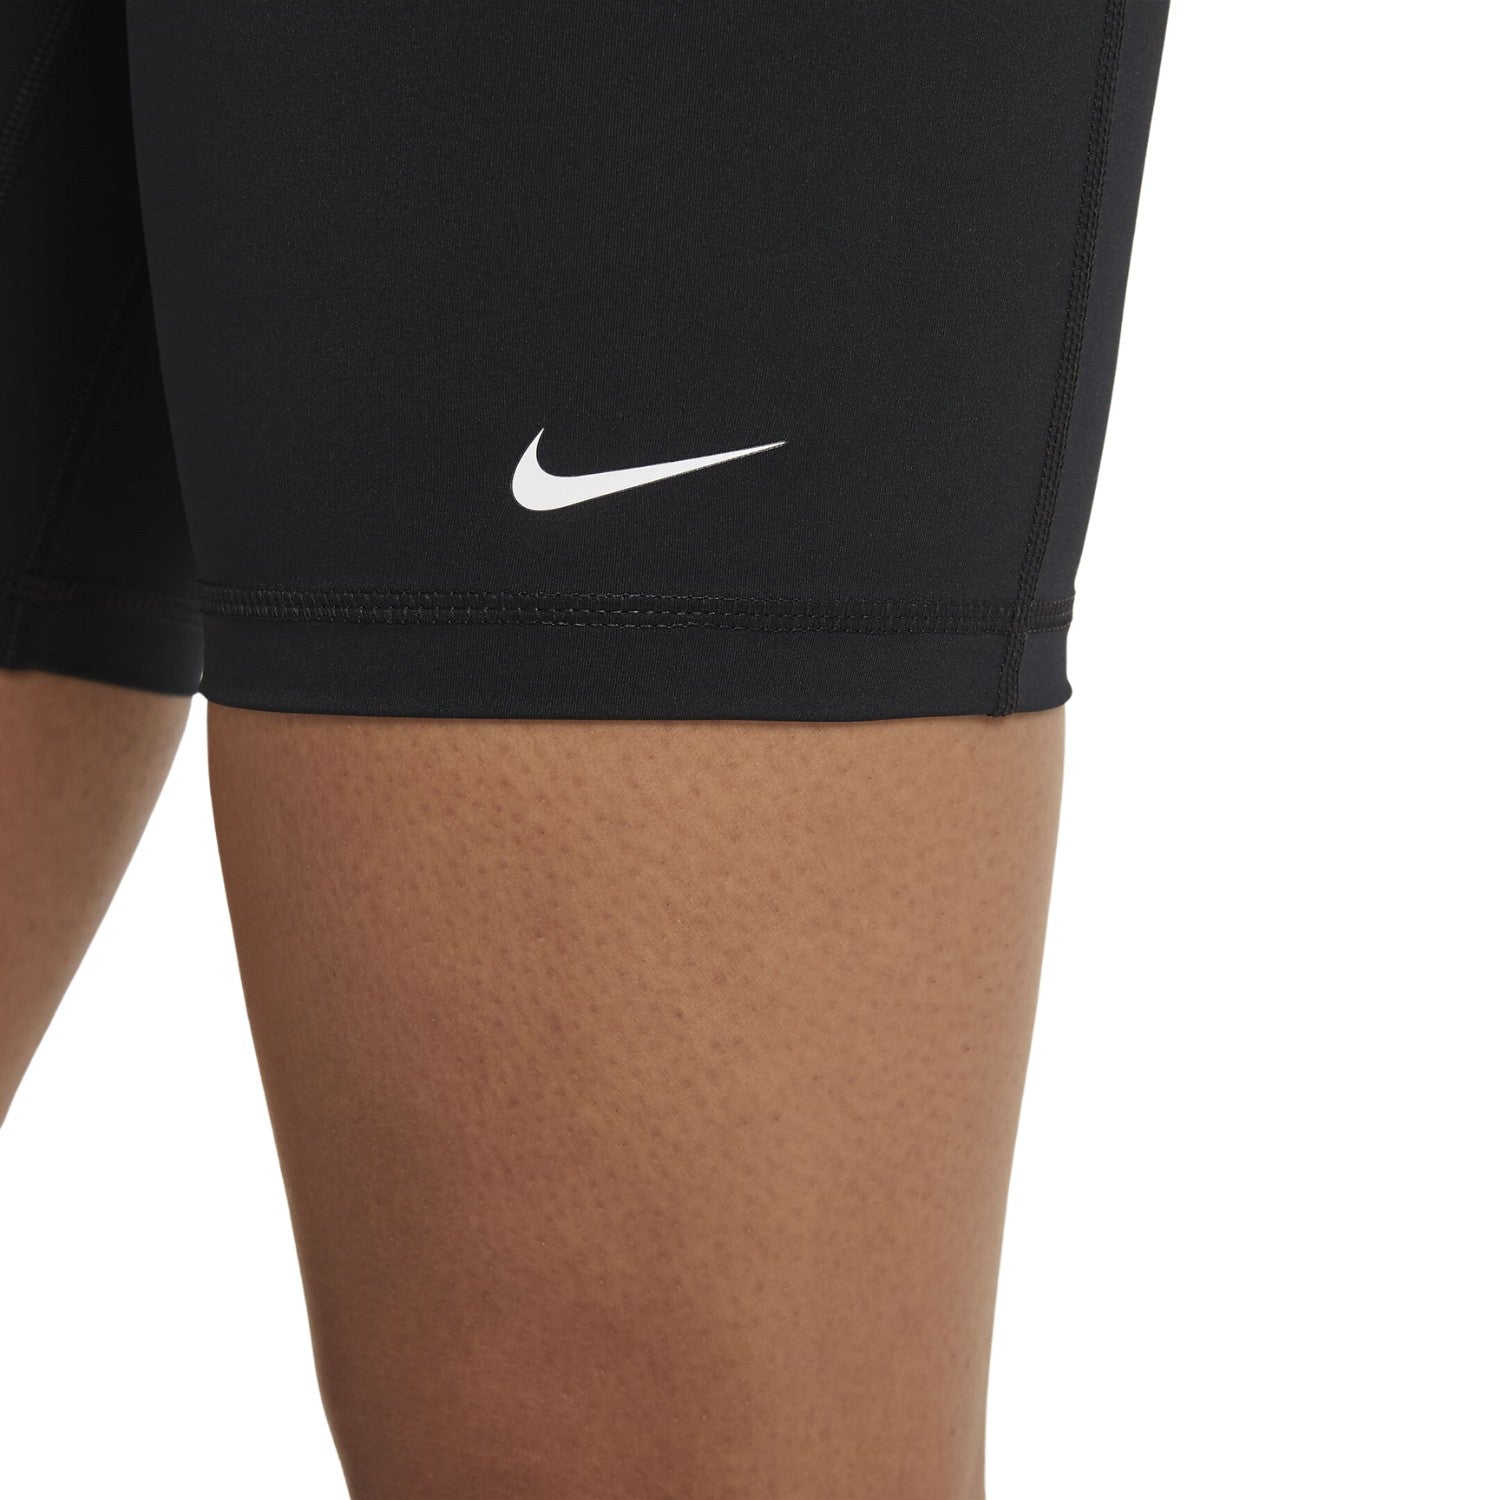 Nike Pro 365 Women's High-waisted 18cm (Approx.) Shorts Womens Style : Da0481